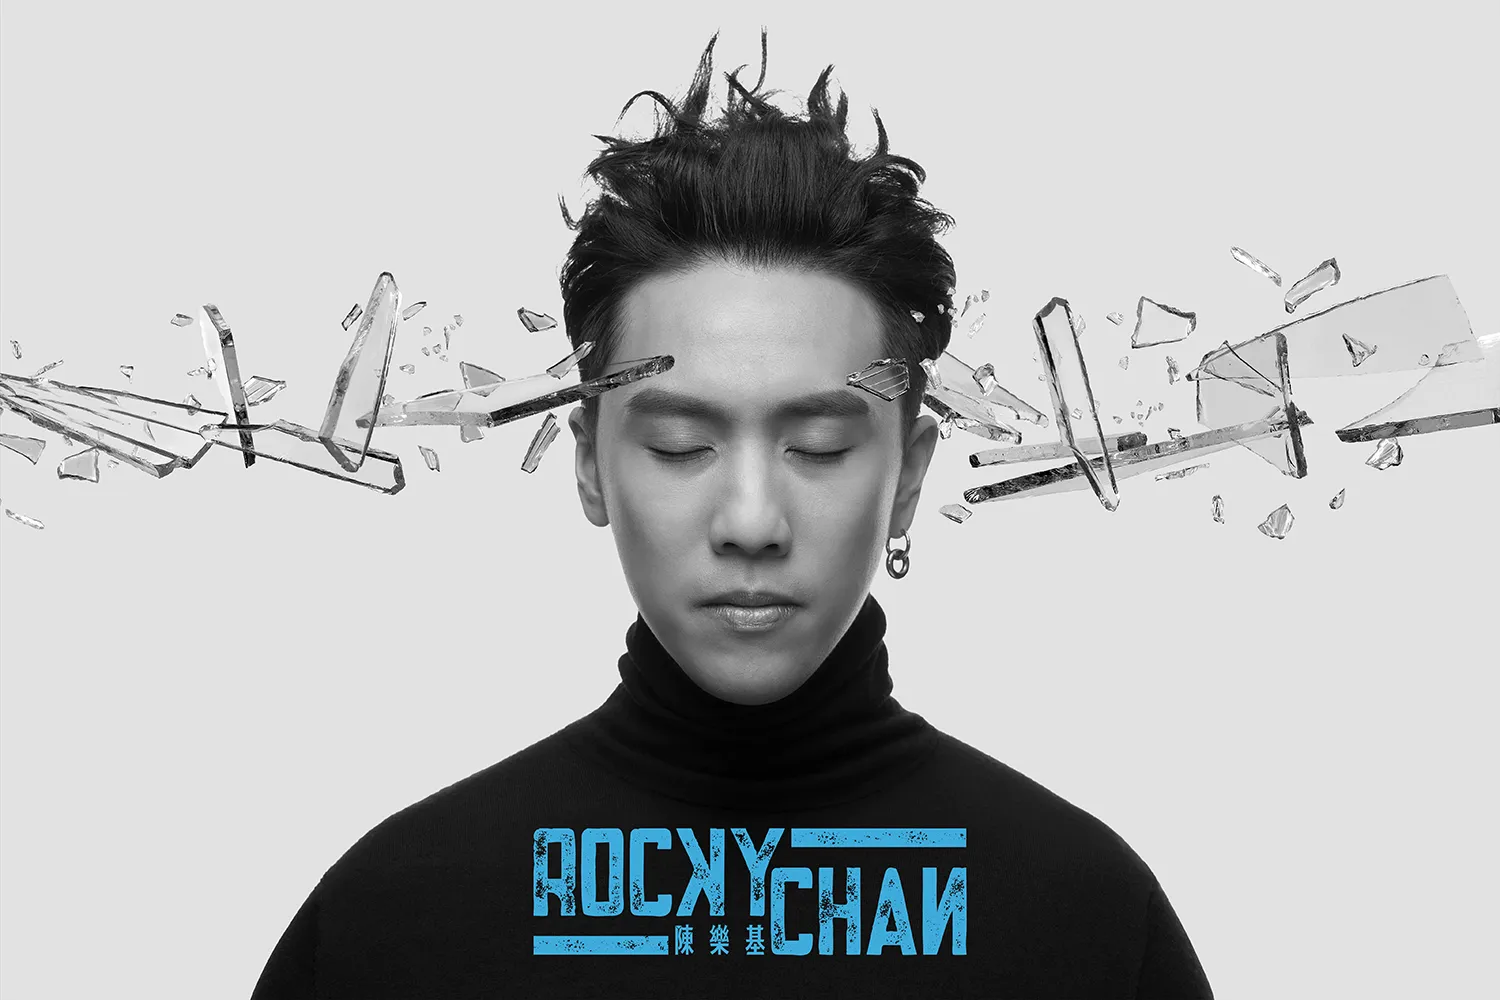  Rocky Chan 【焦点图】.jpg